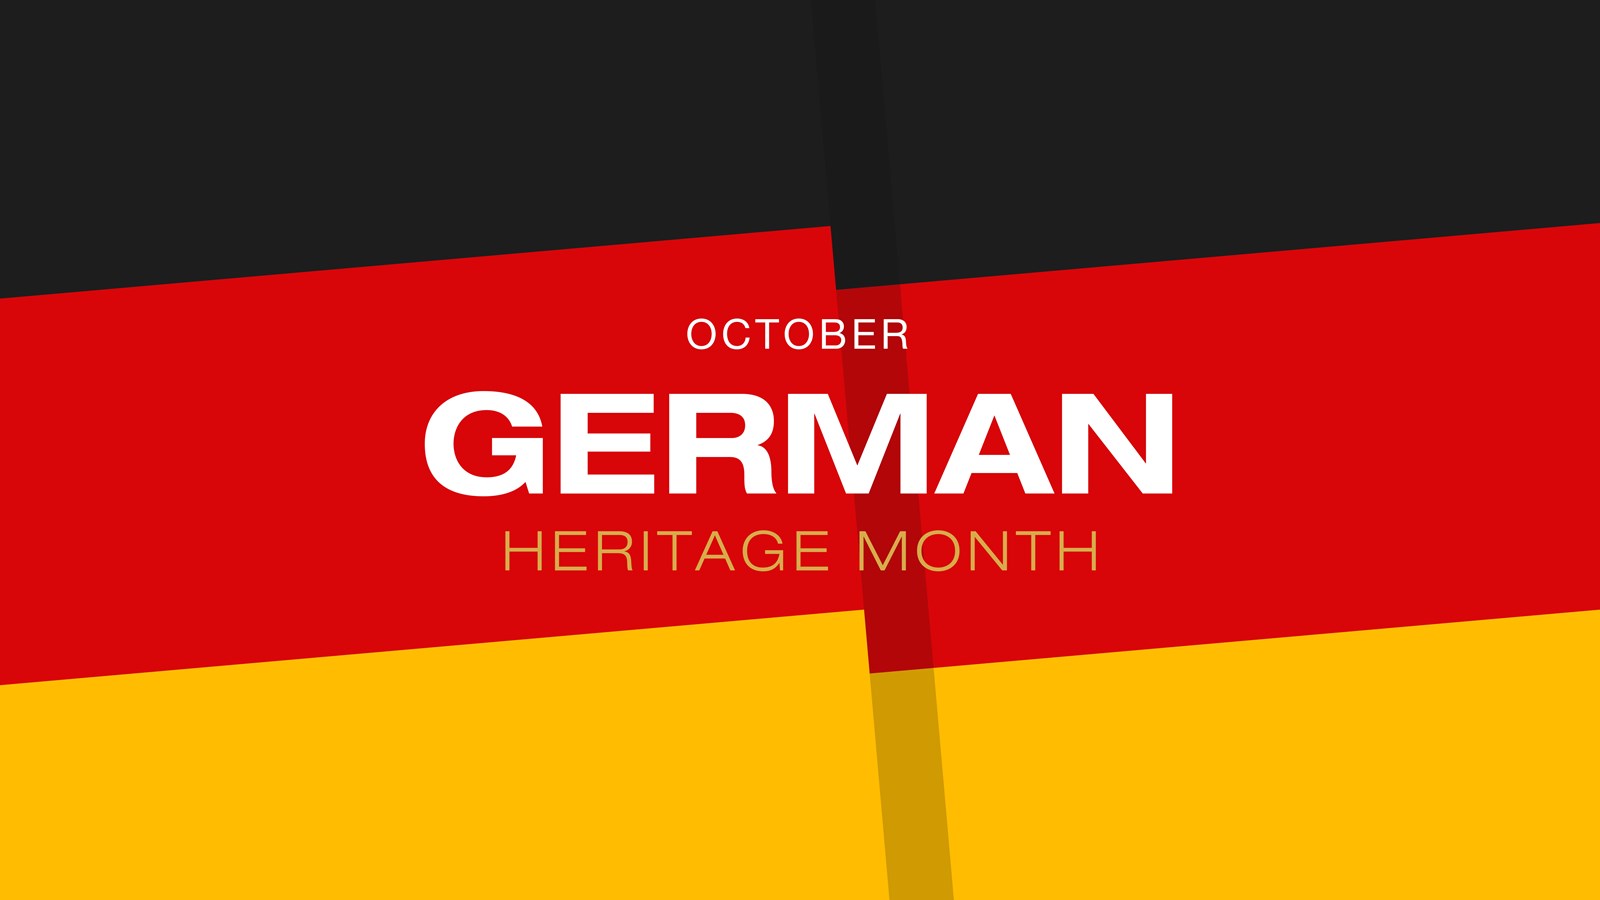 German Heritage Month October